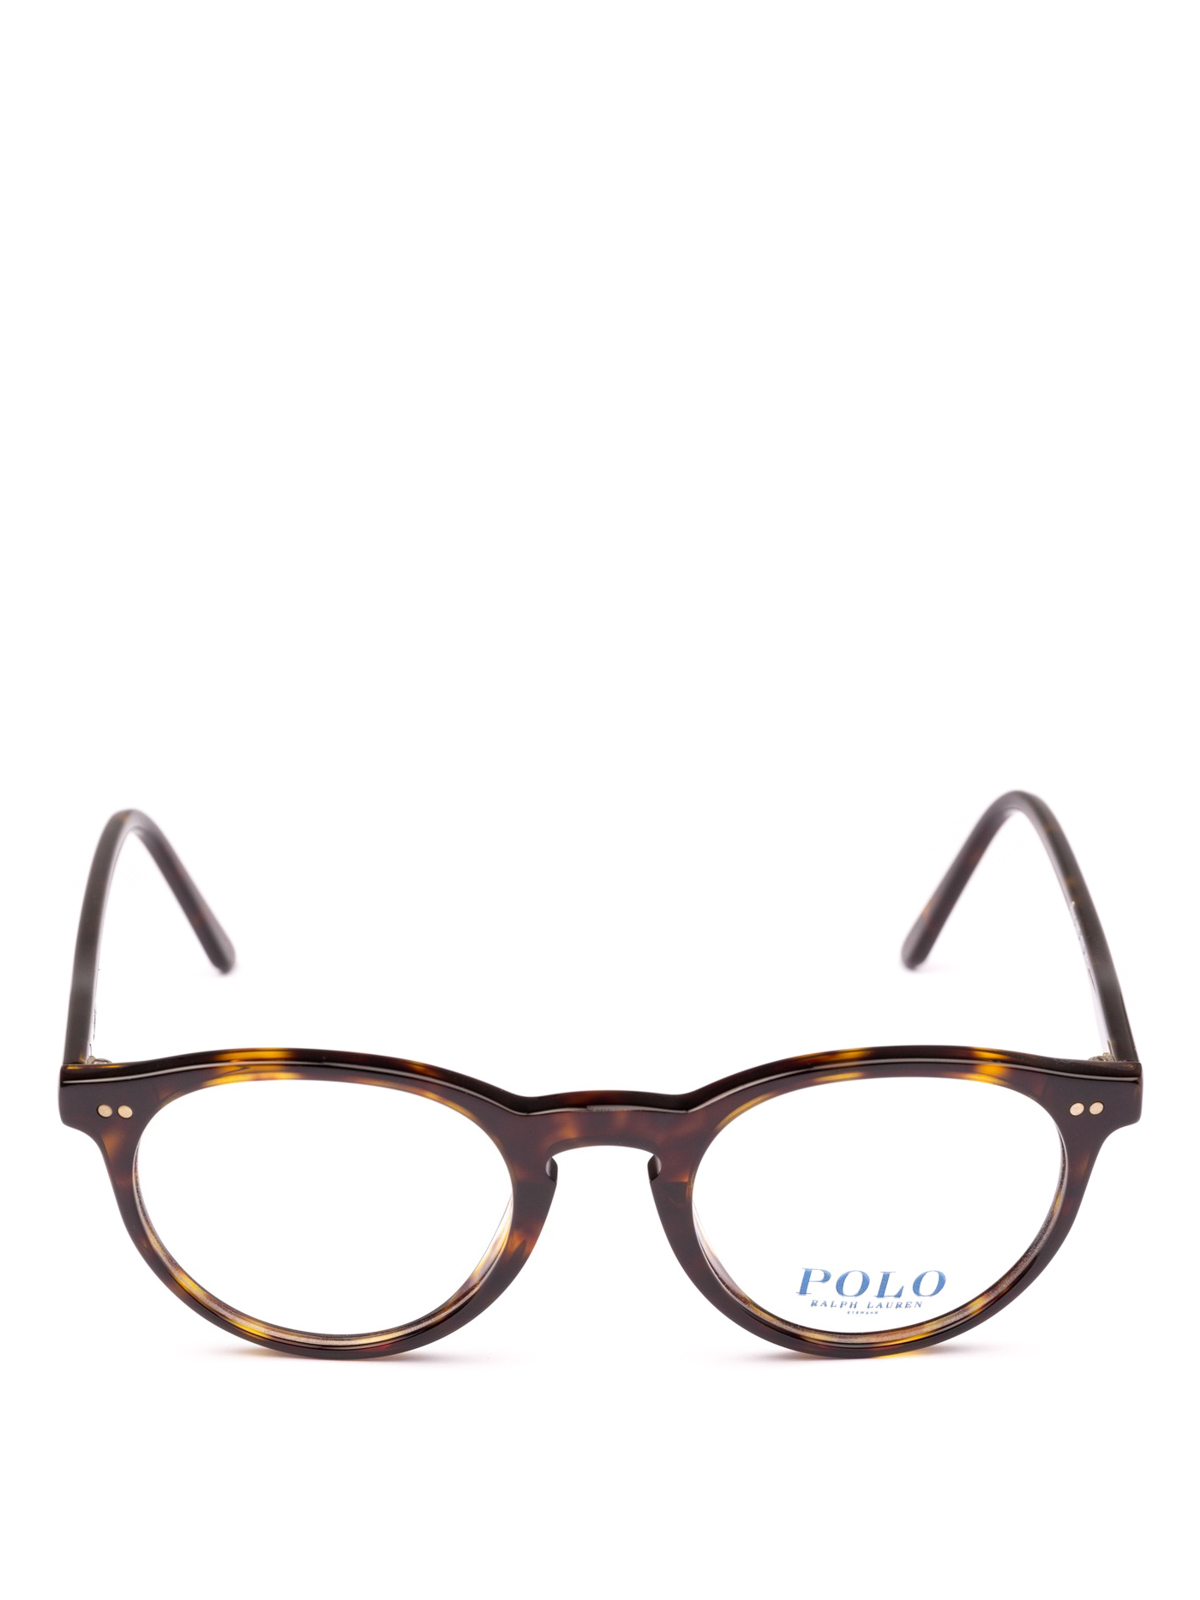 polo round glasses